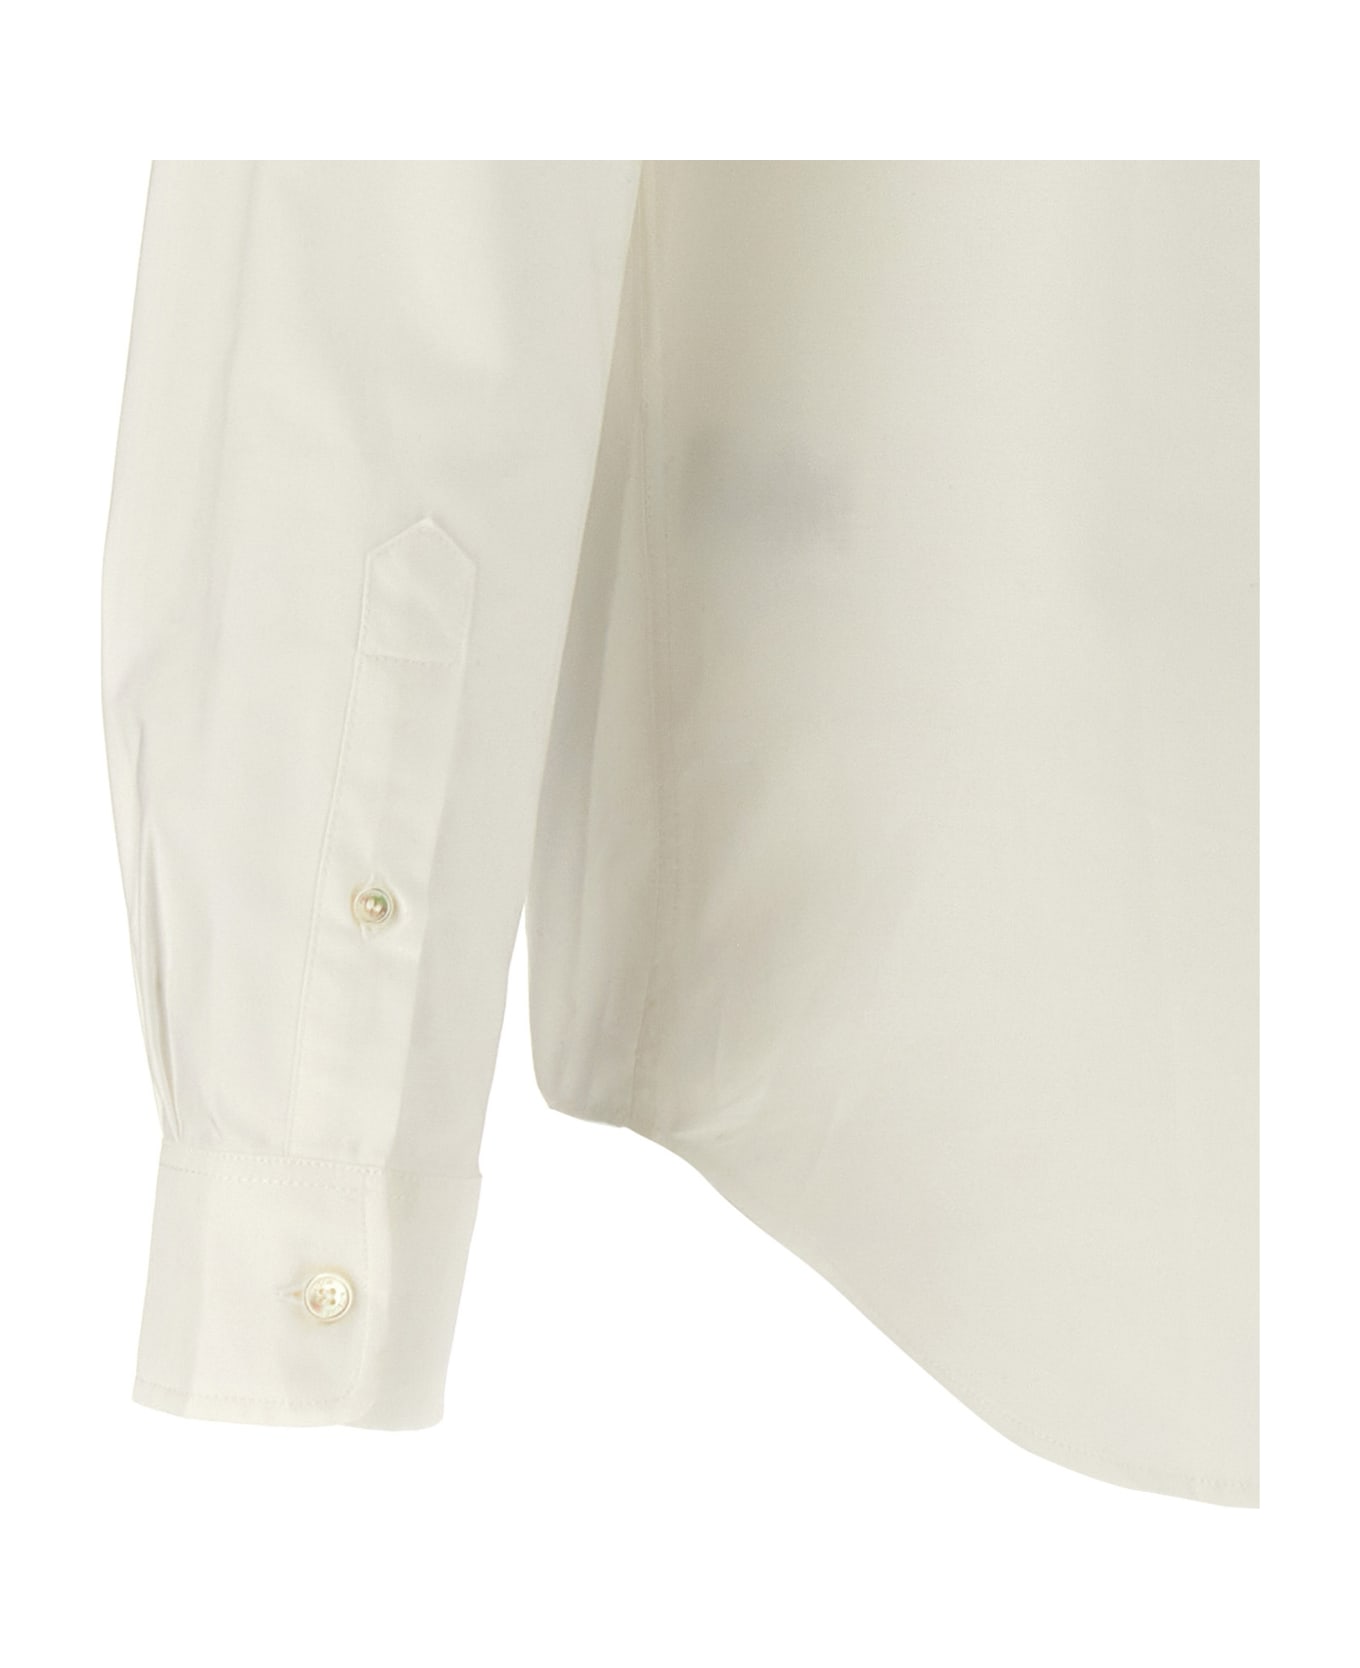 Maison Kitsuné 'mini Fox Head Classic' Shirt - White